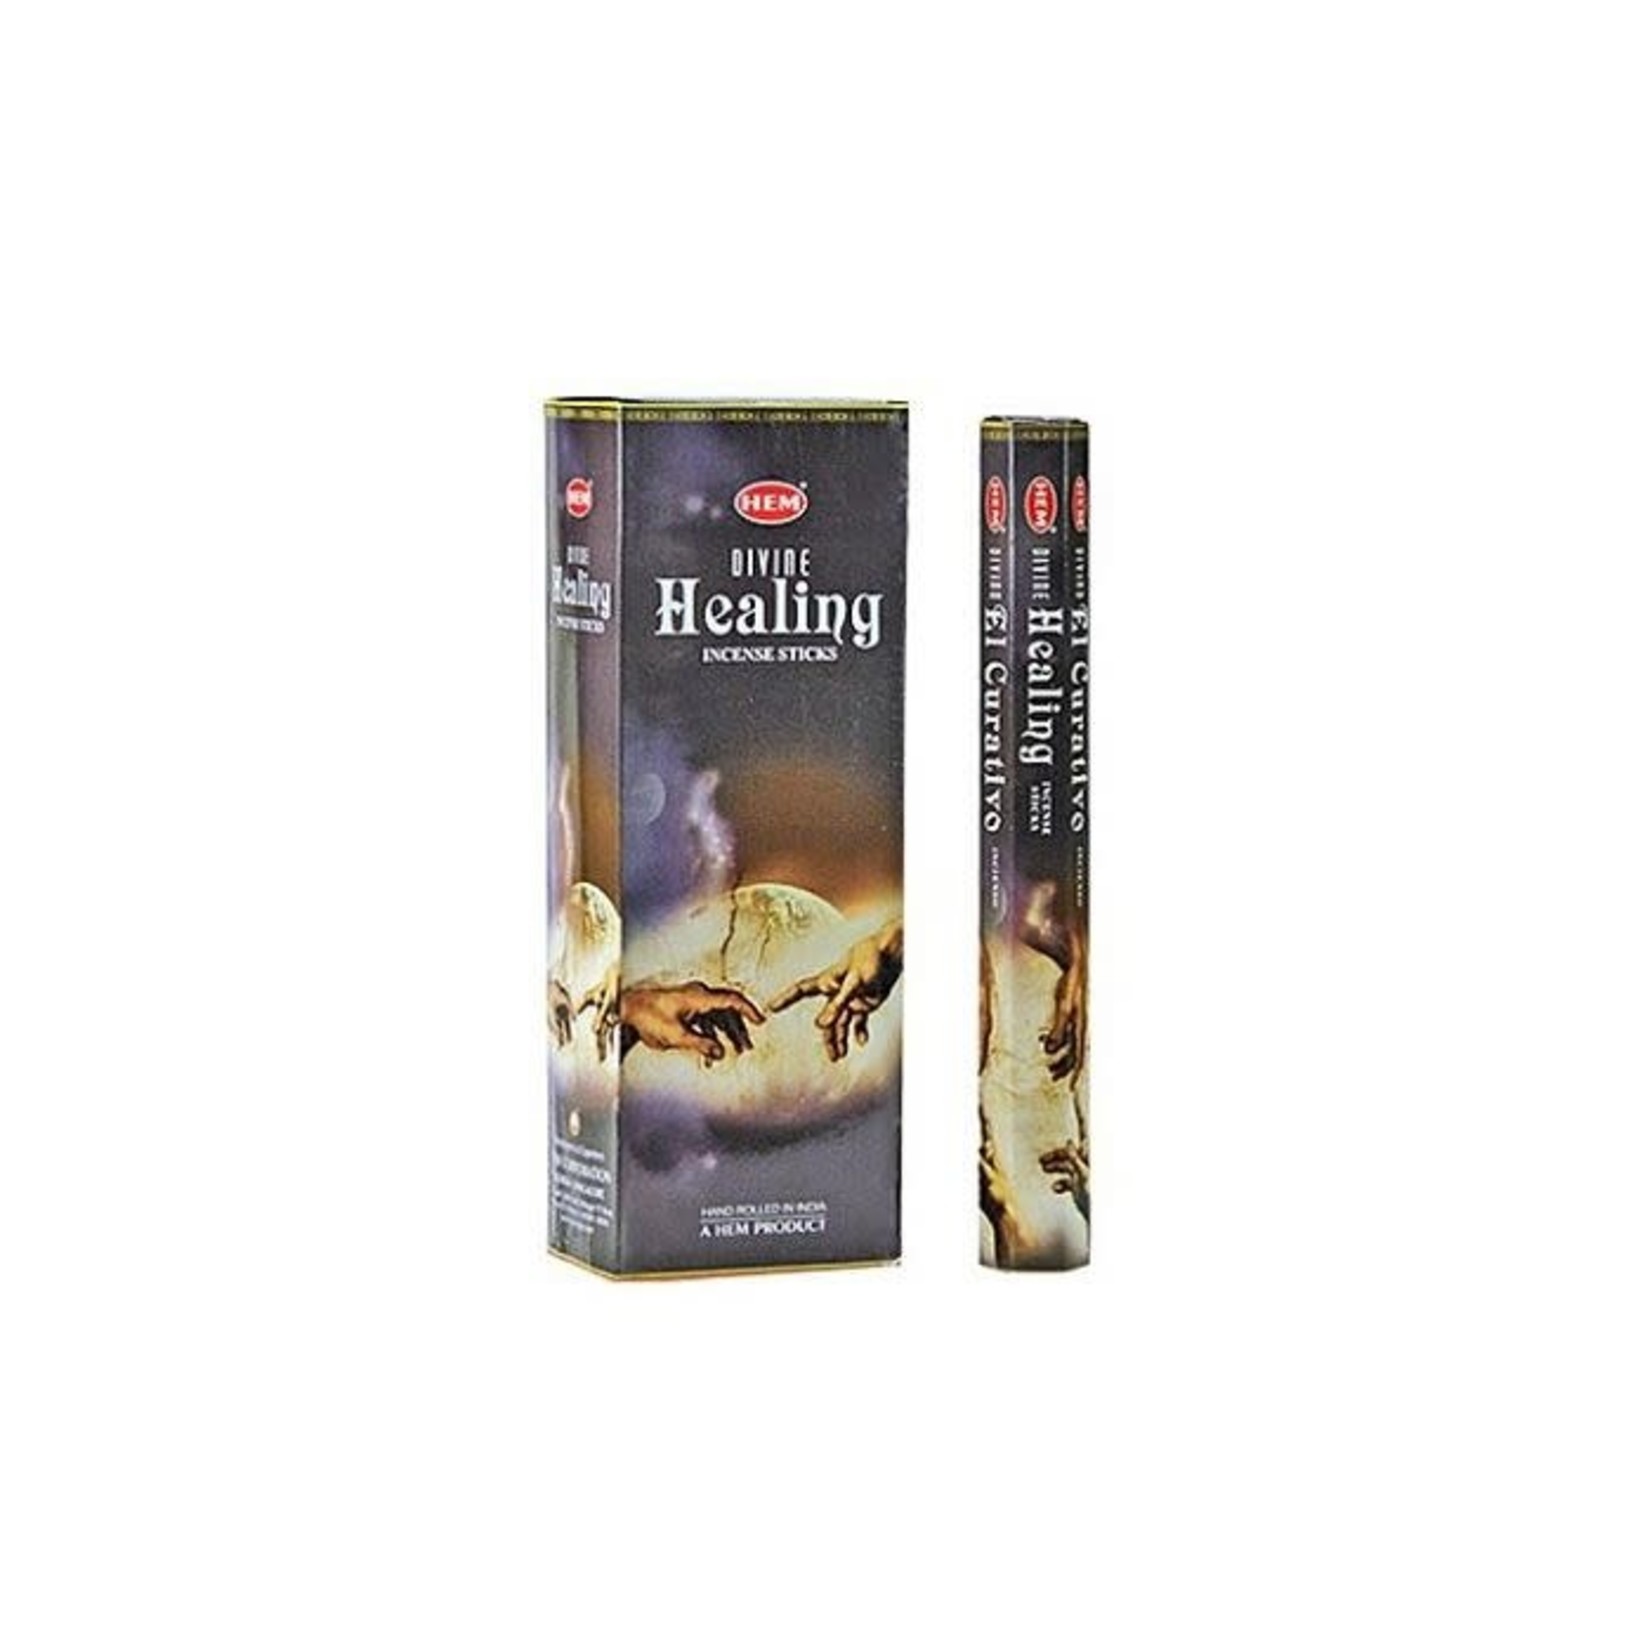 Divine Healing Incense Sticks (HEM)